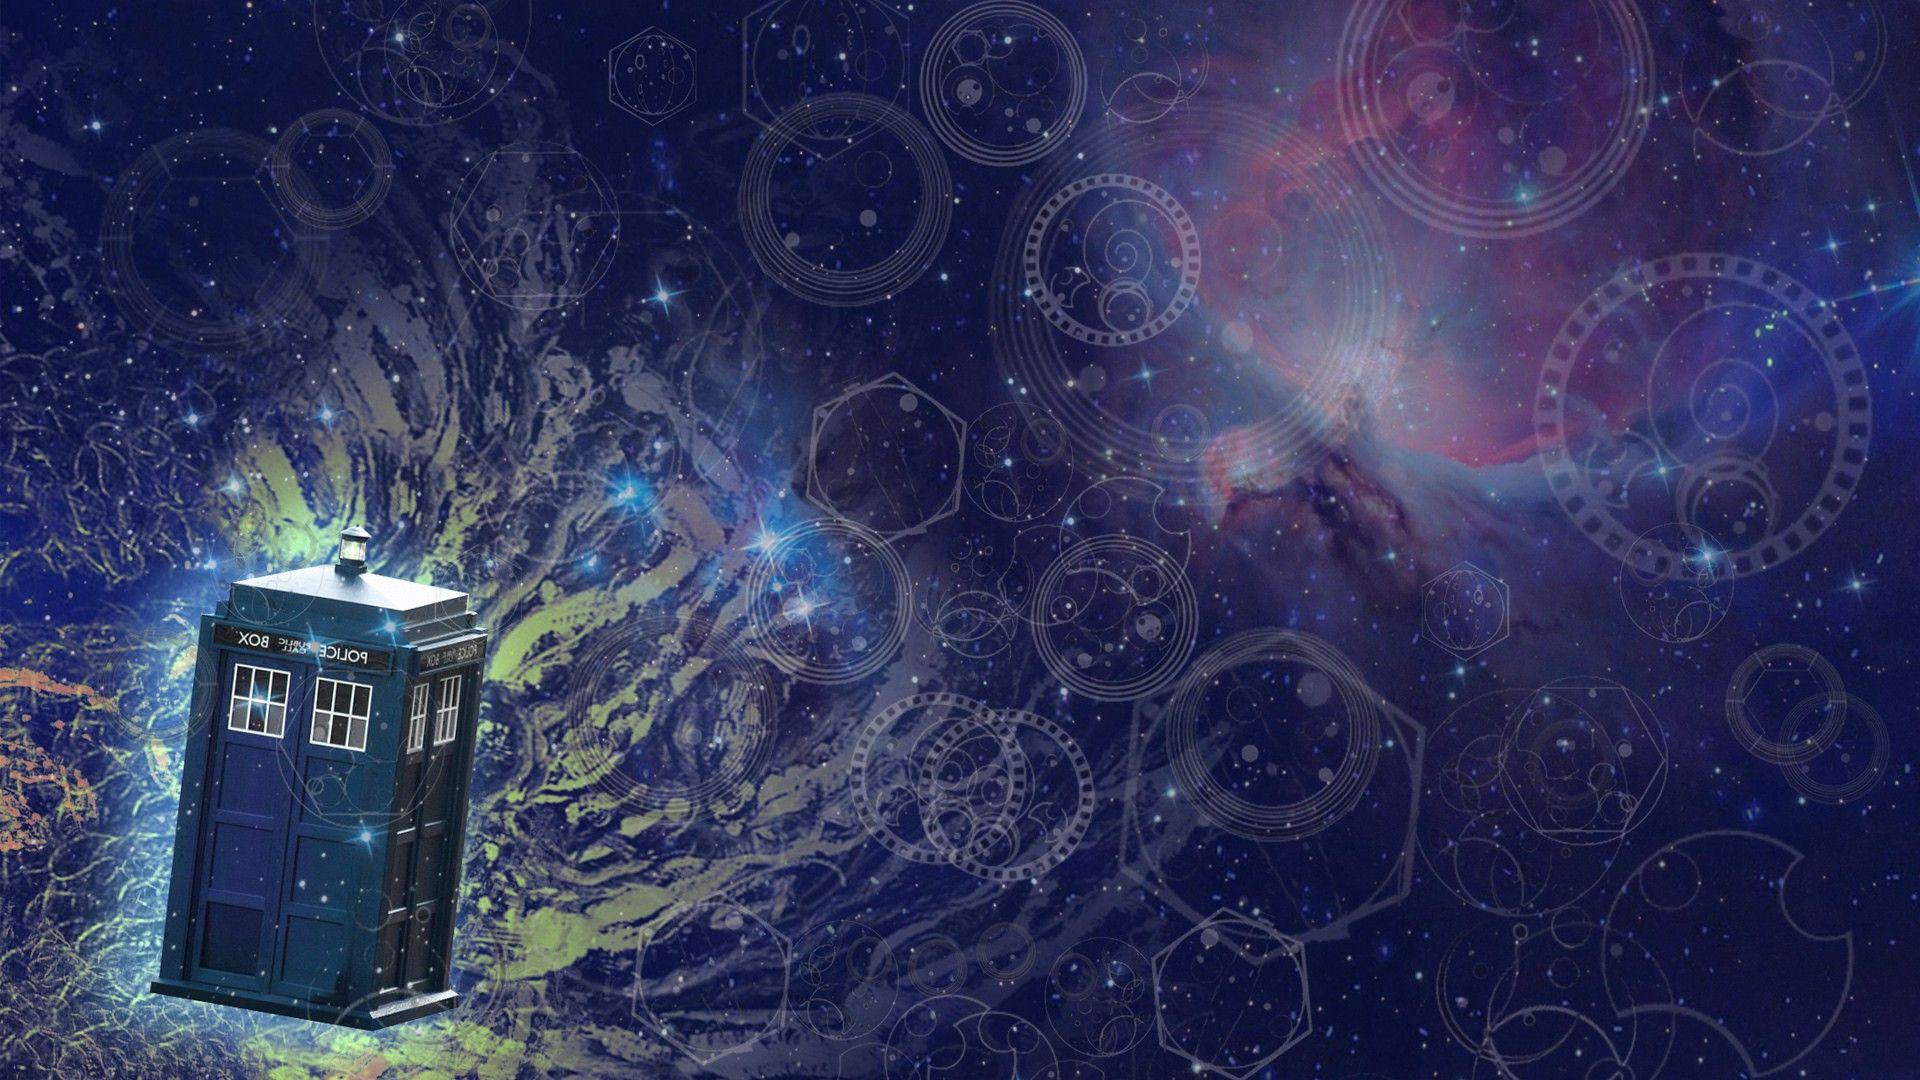 Digital Universe Space Time Travel wallpaper Desktop, Phone